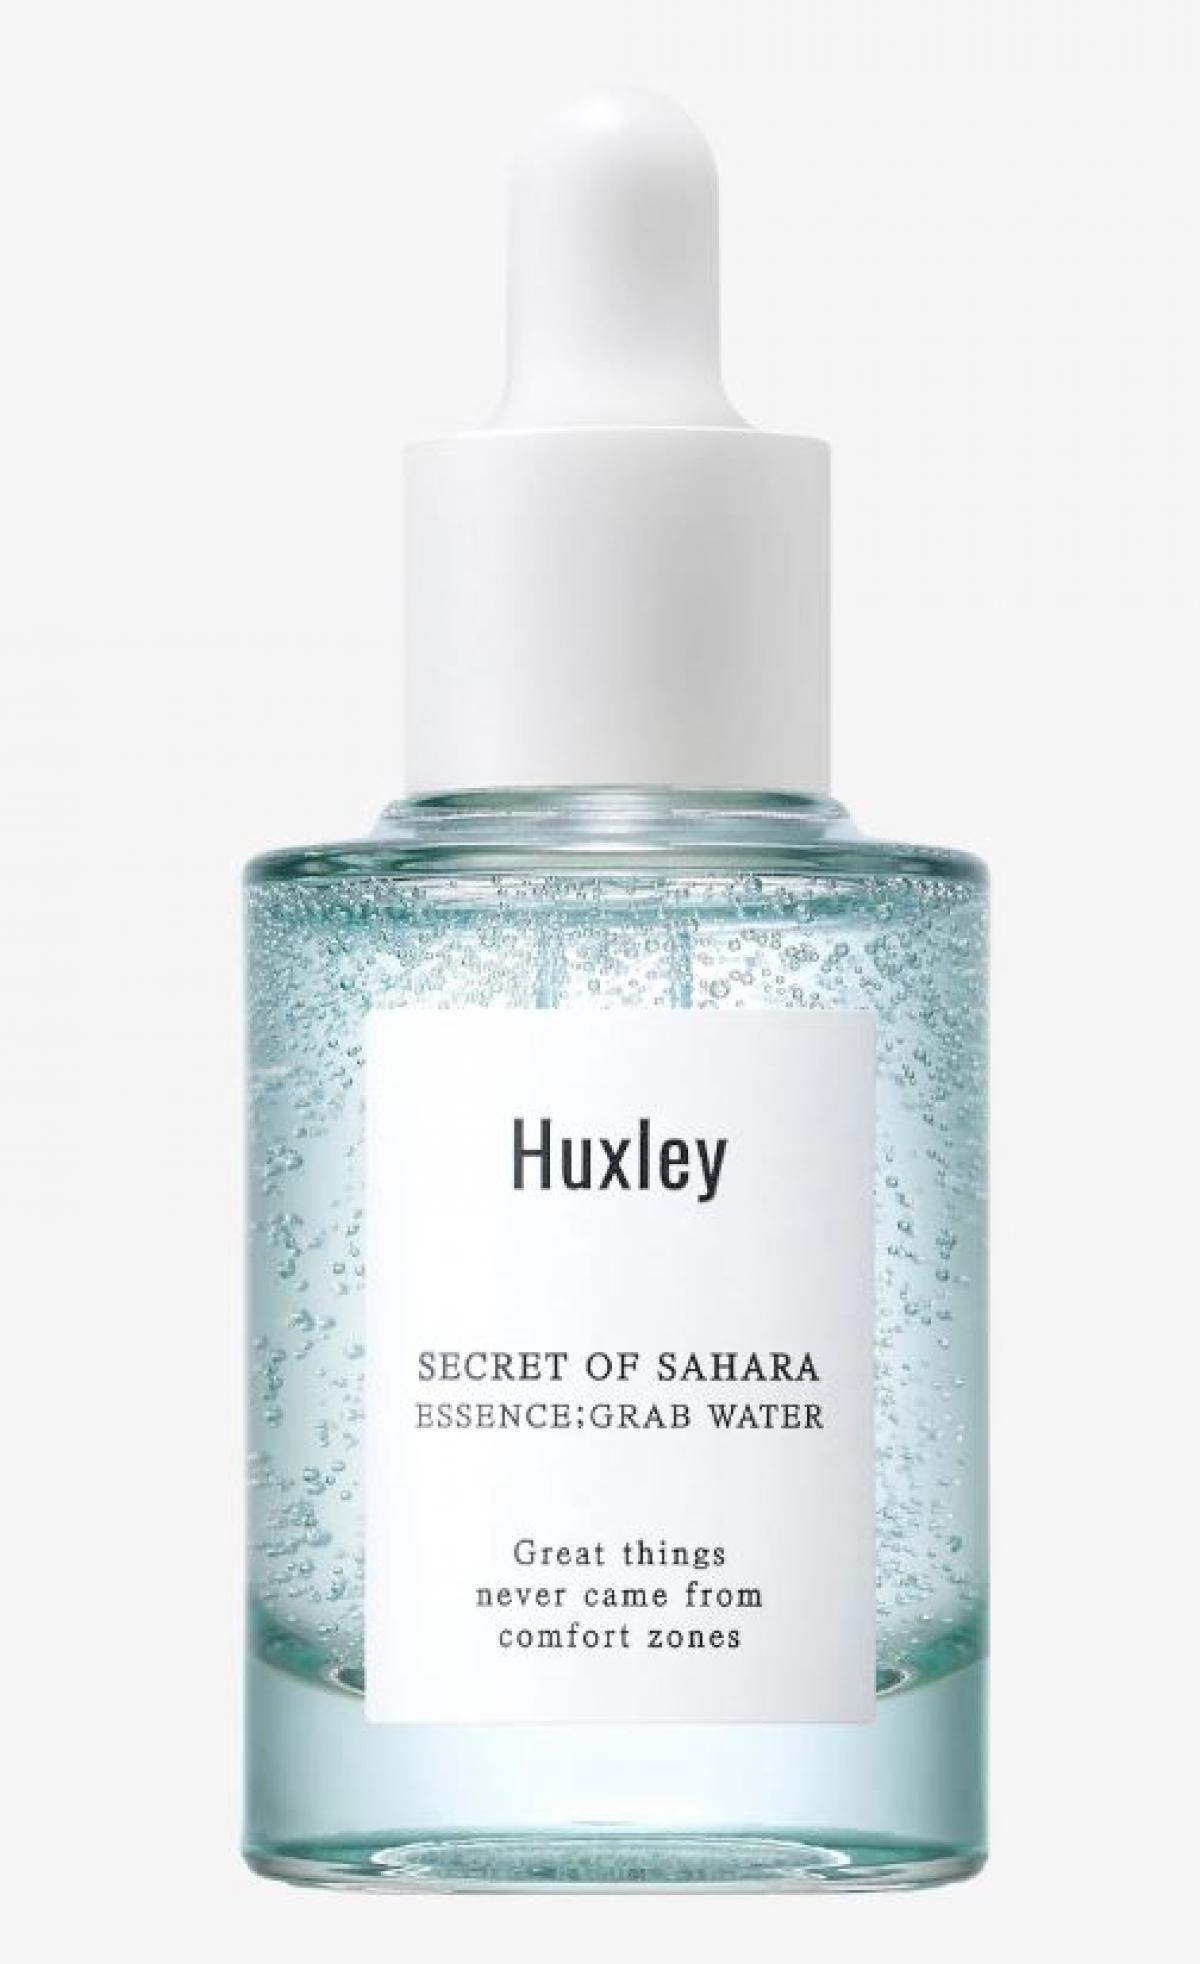 Huxley grab water essence 